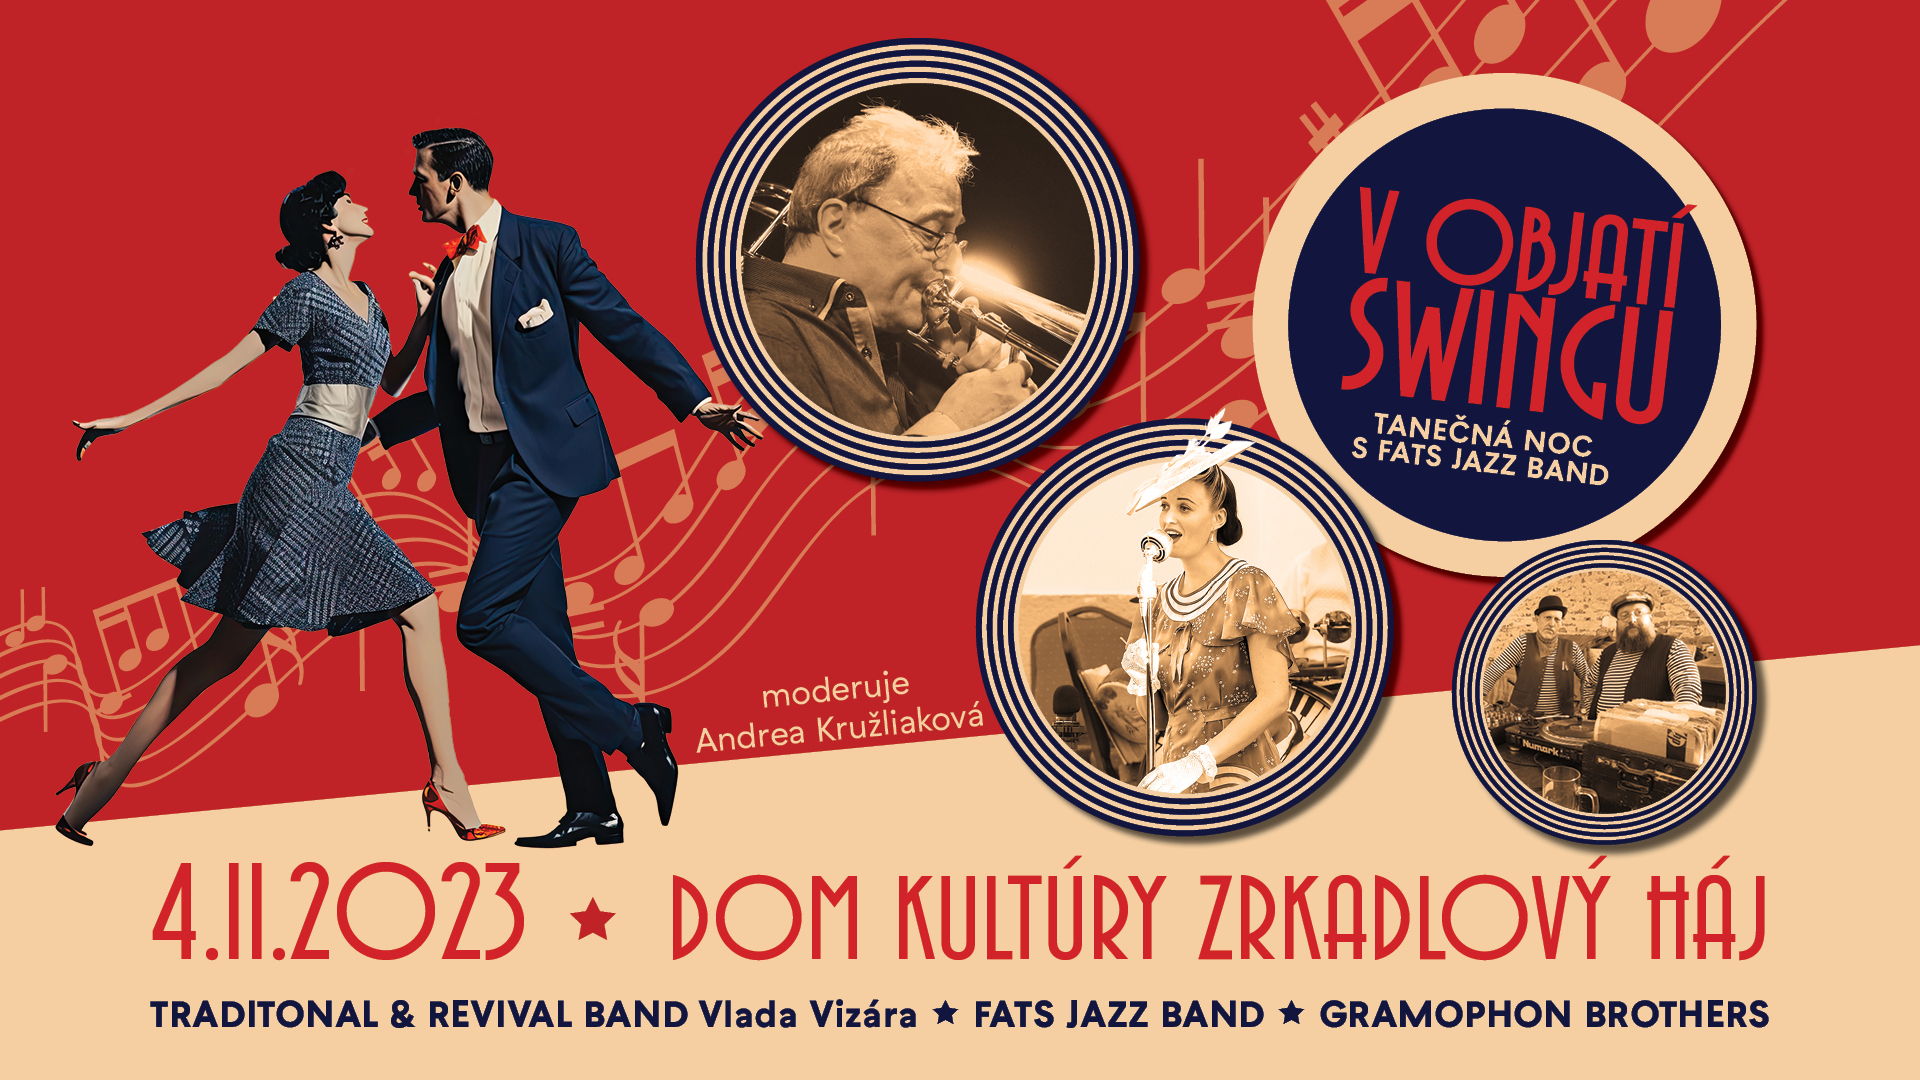 V objat SWINGU - Tanen noc s Fats jazz  band 2023 Petralka